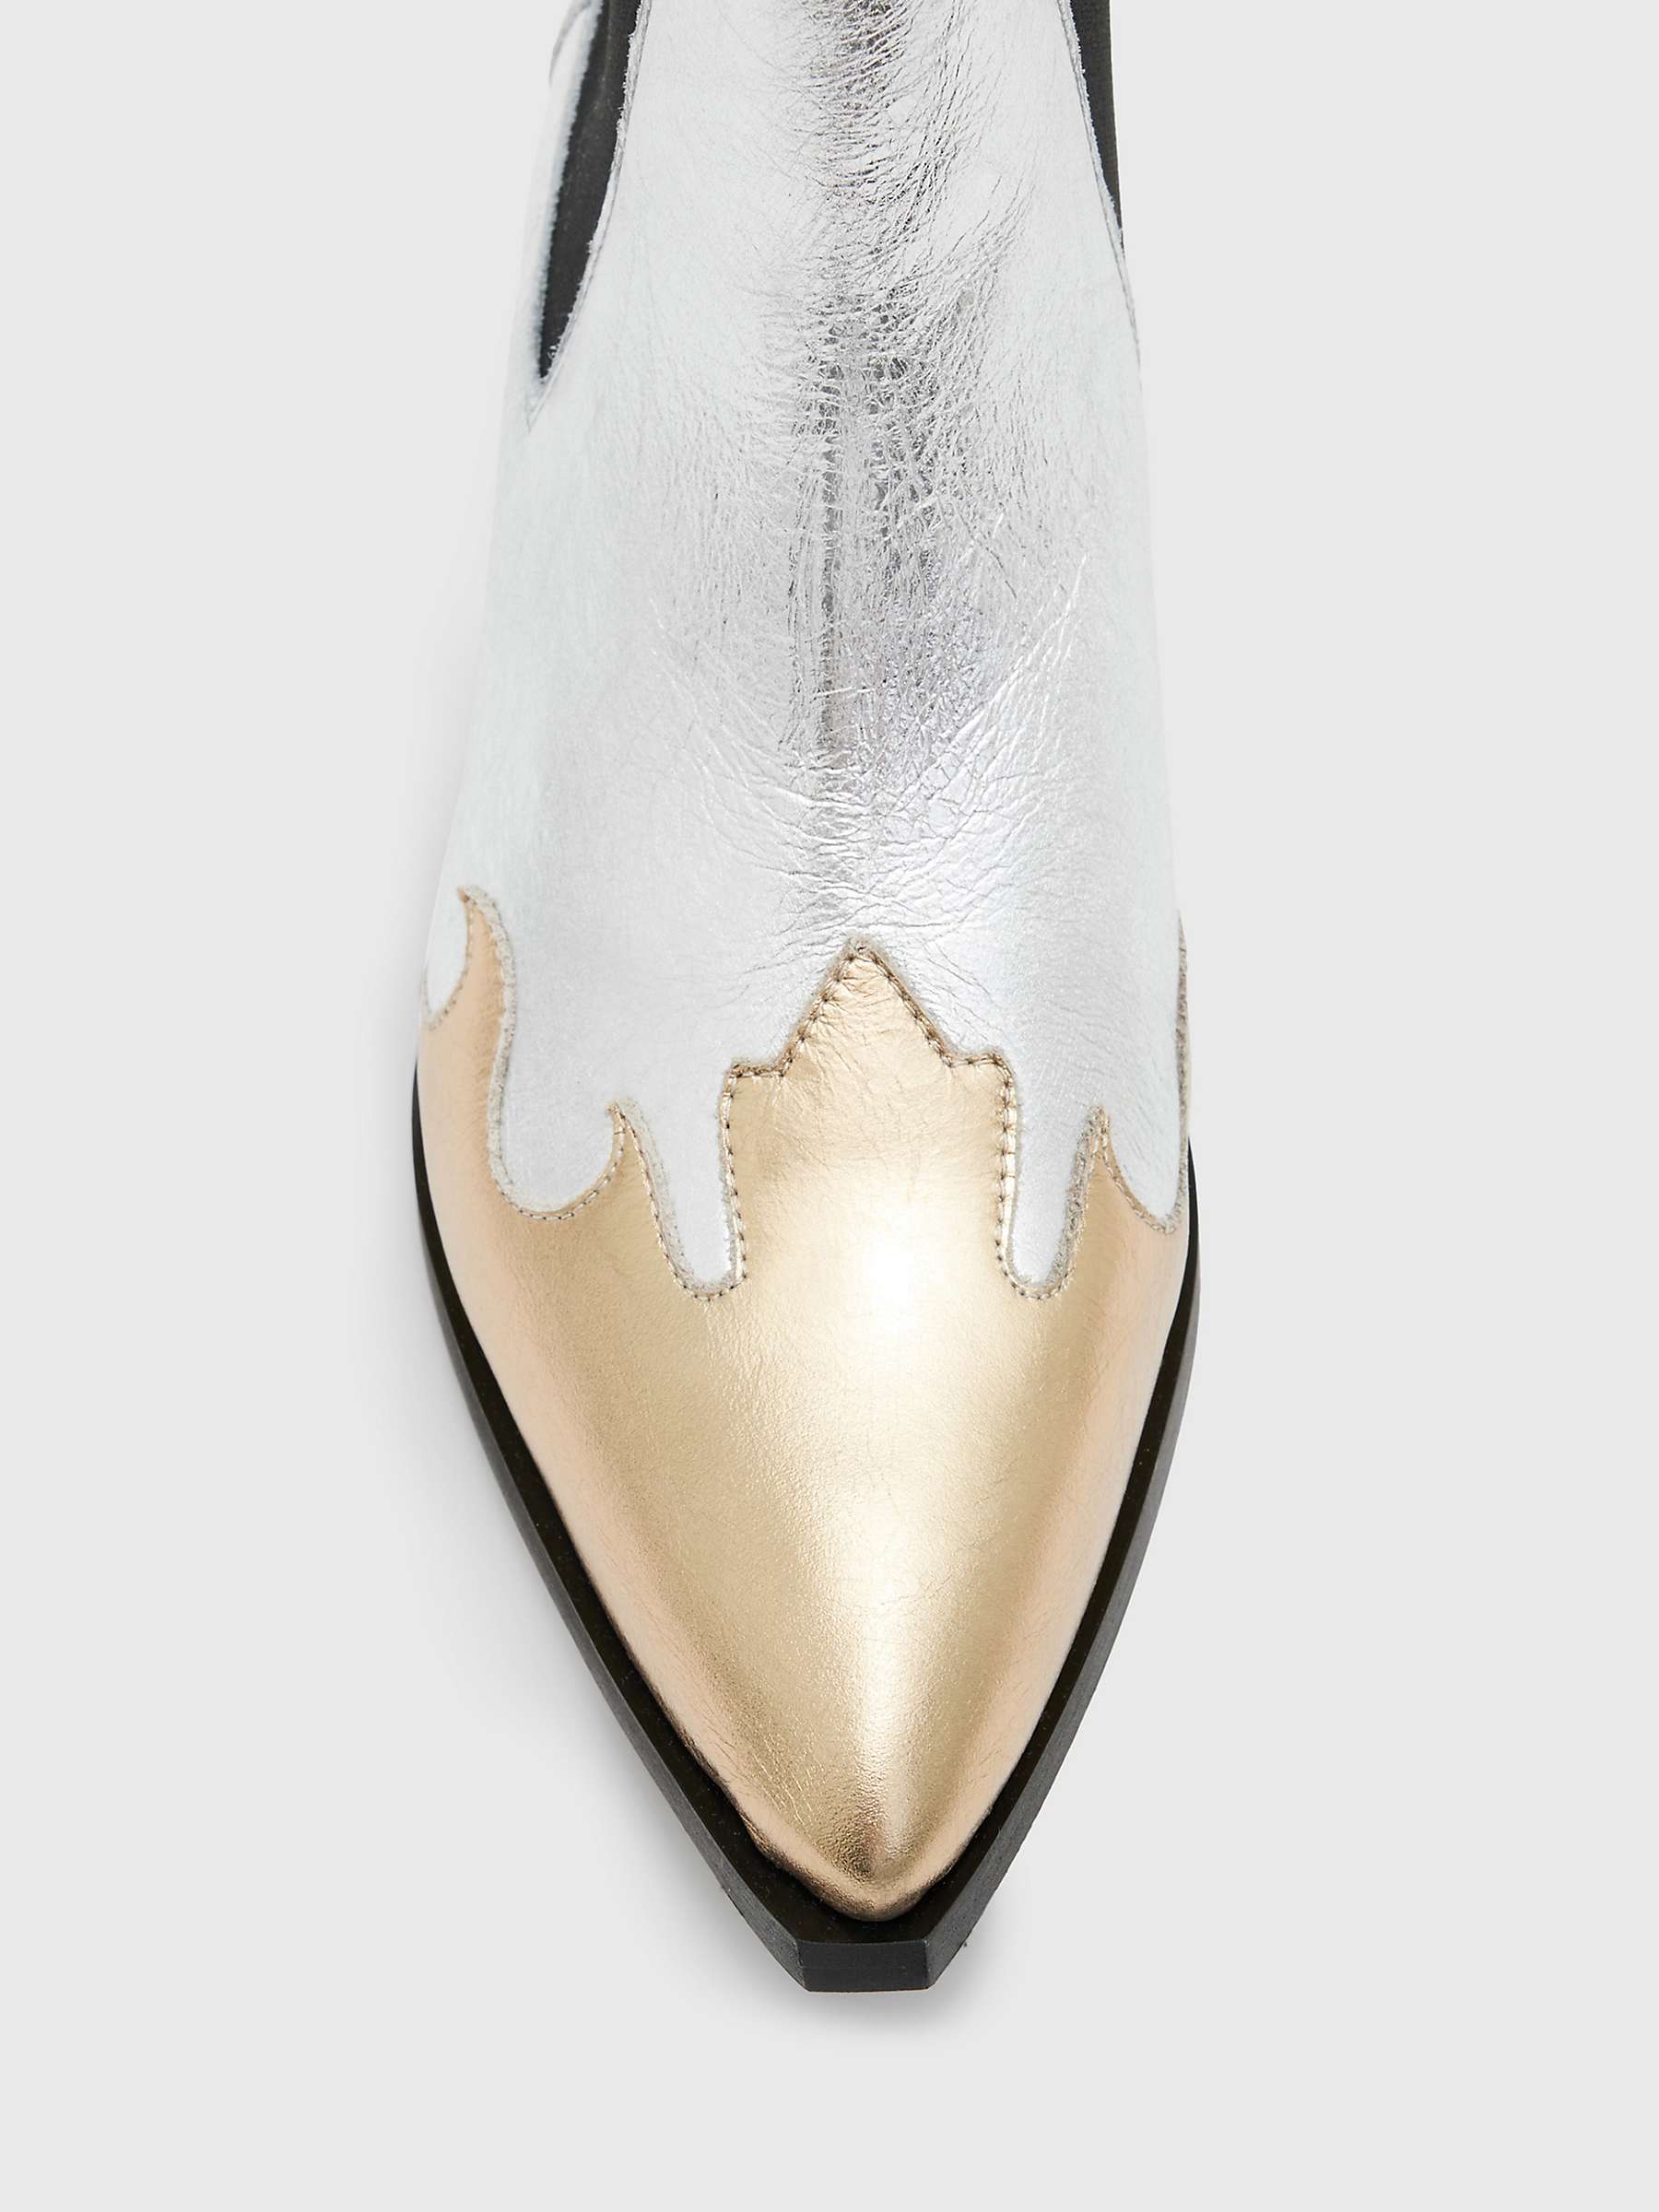 Buy AllSaints Della Cowboy Leather Ankle Boots, Silver/Gold Online at johnlewis.com